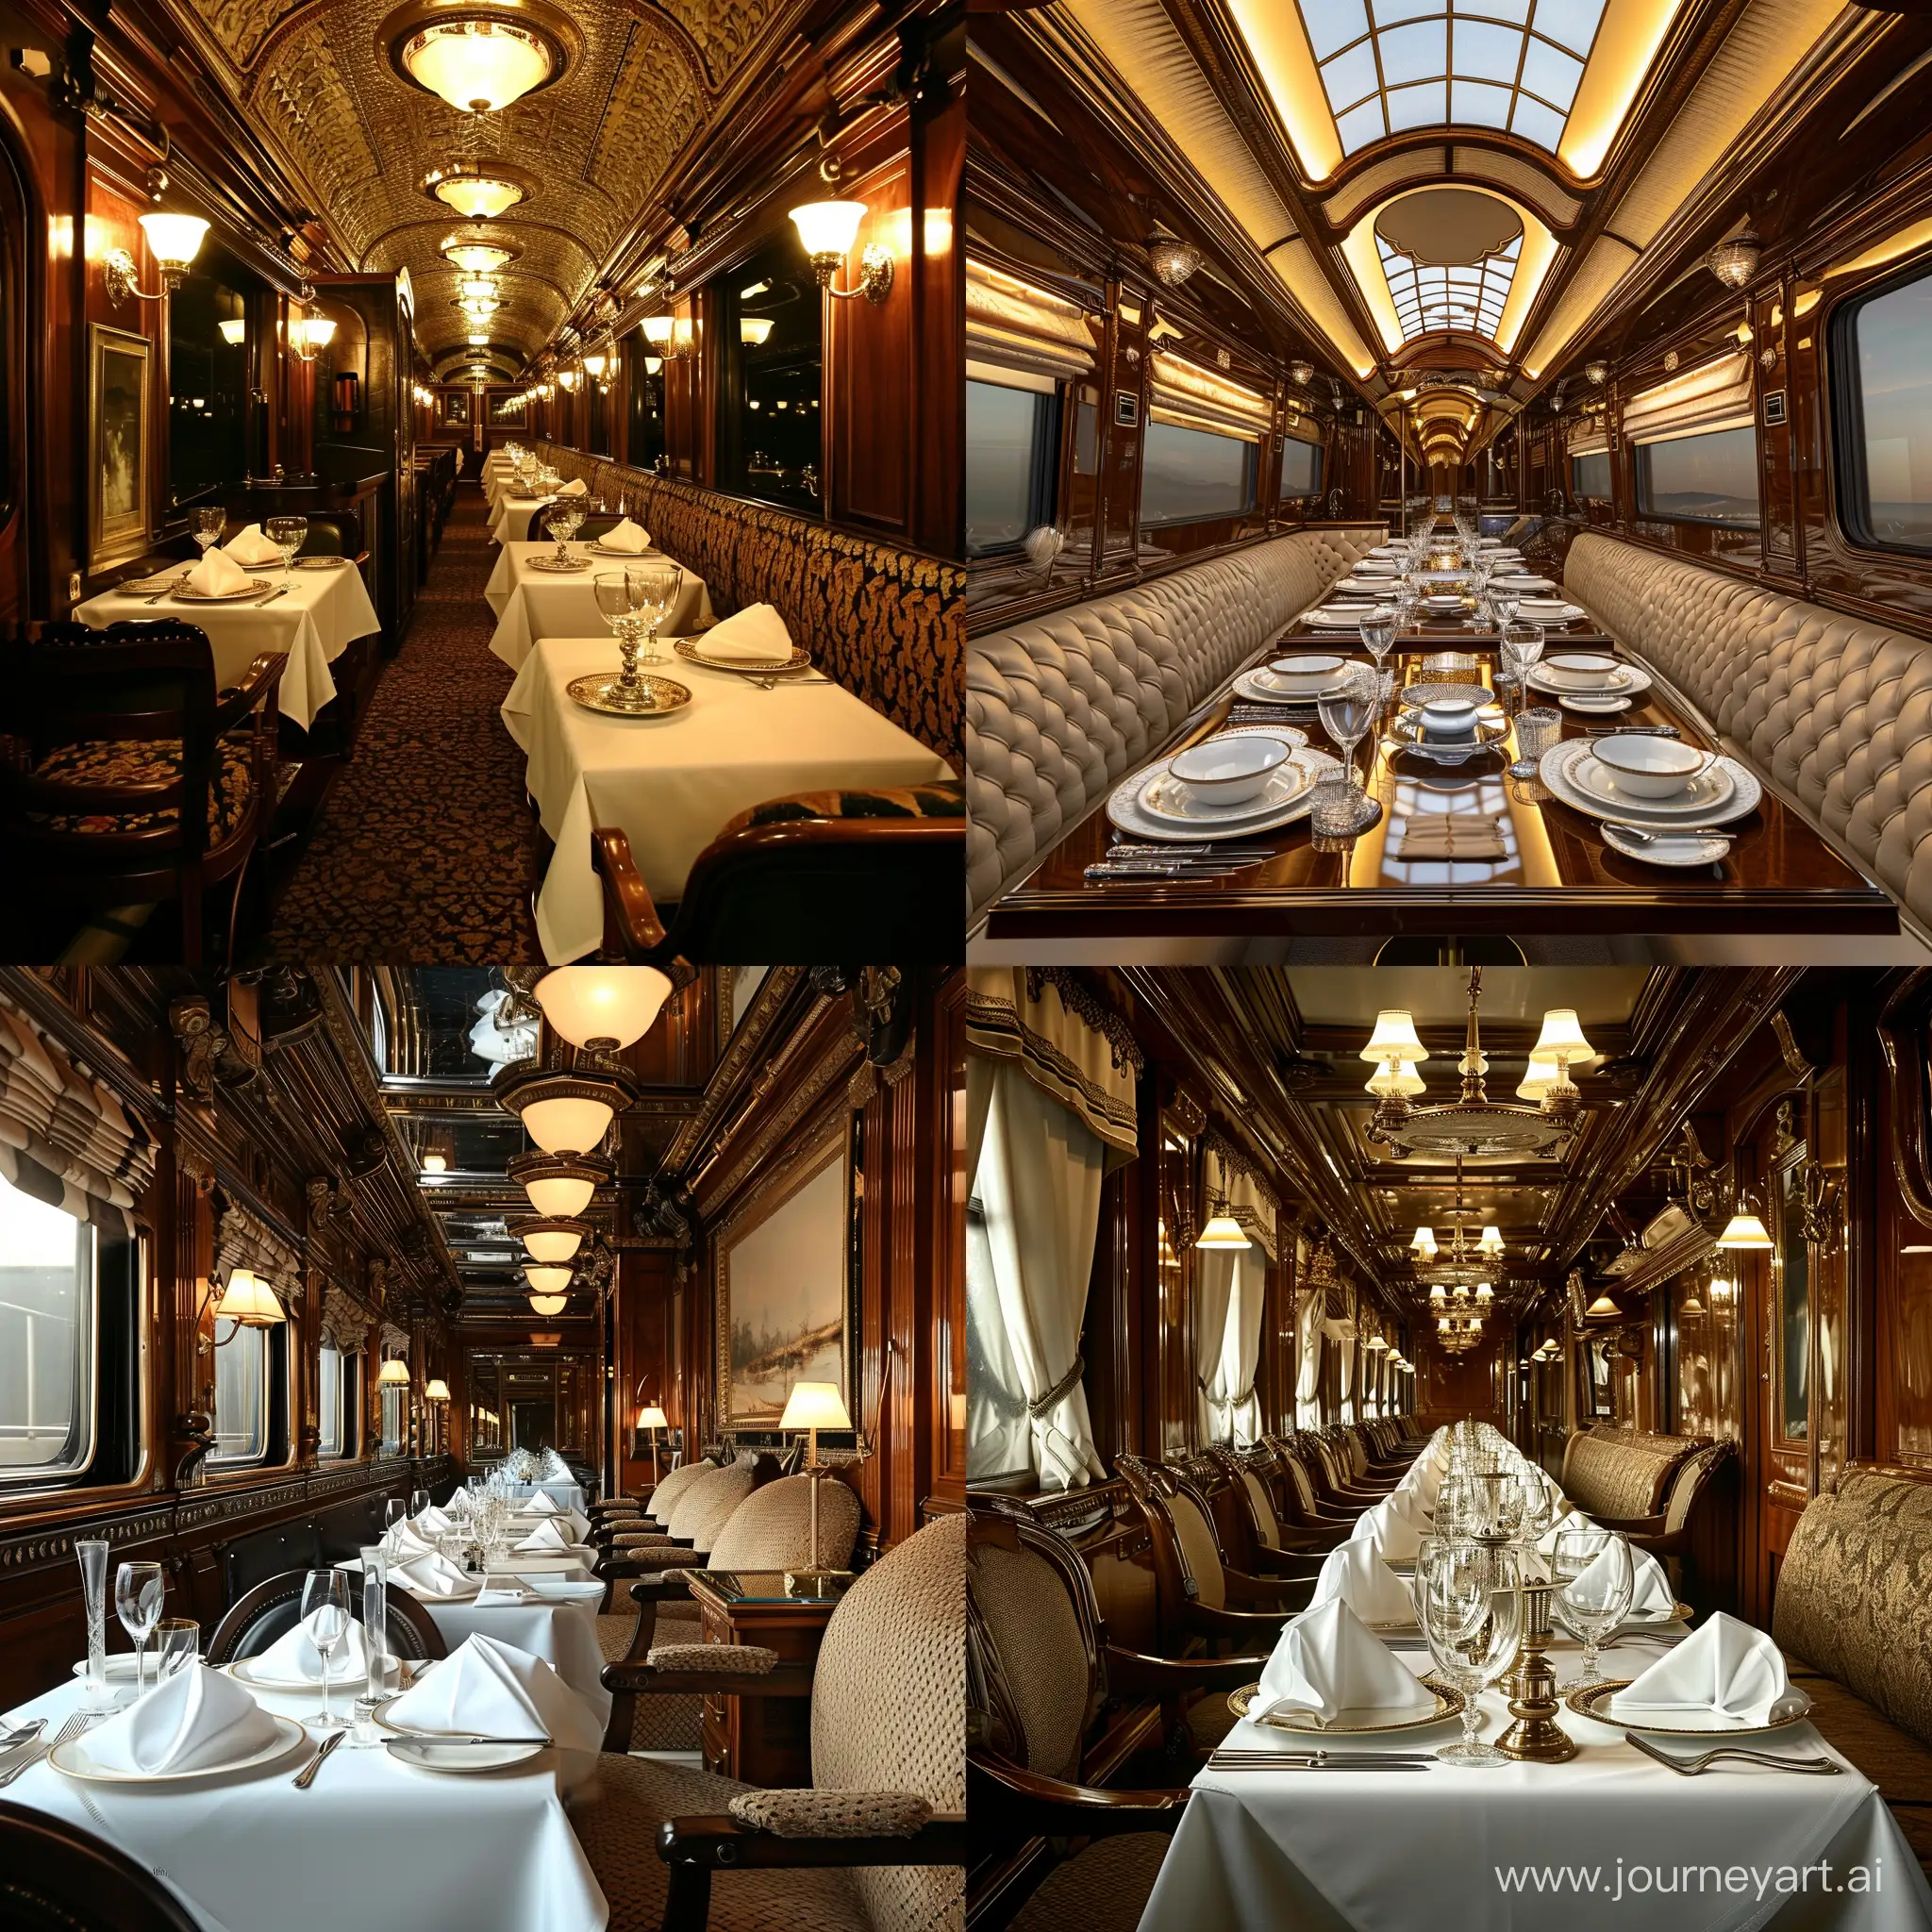 Luxury vintage dining car interior